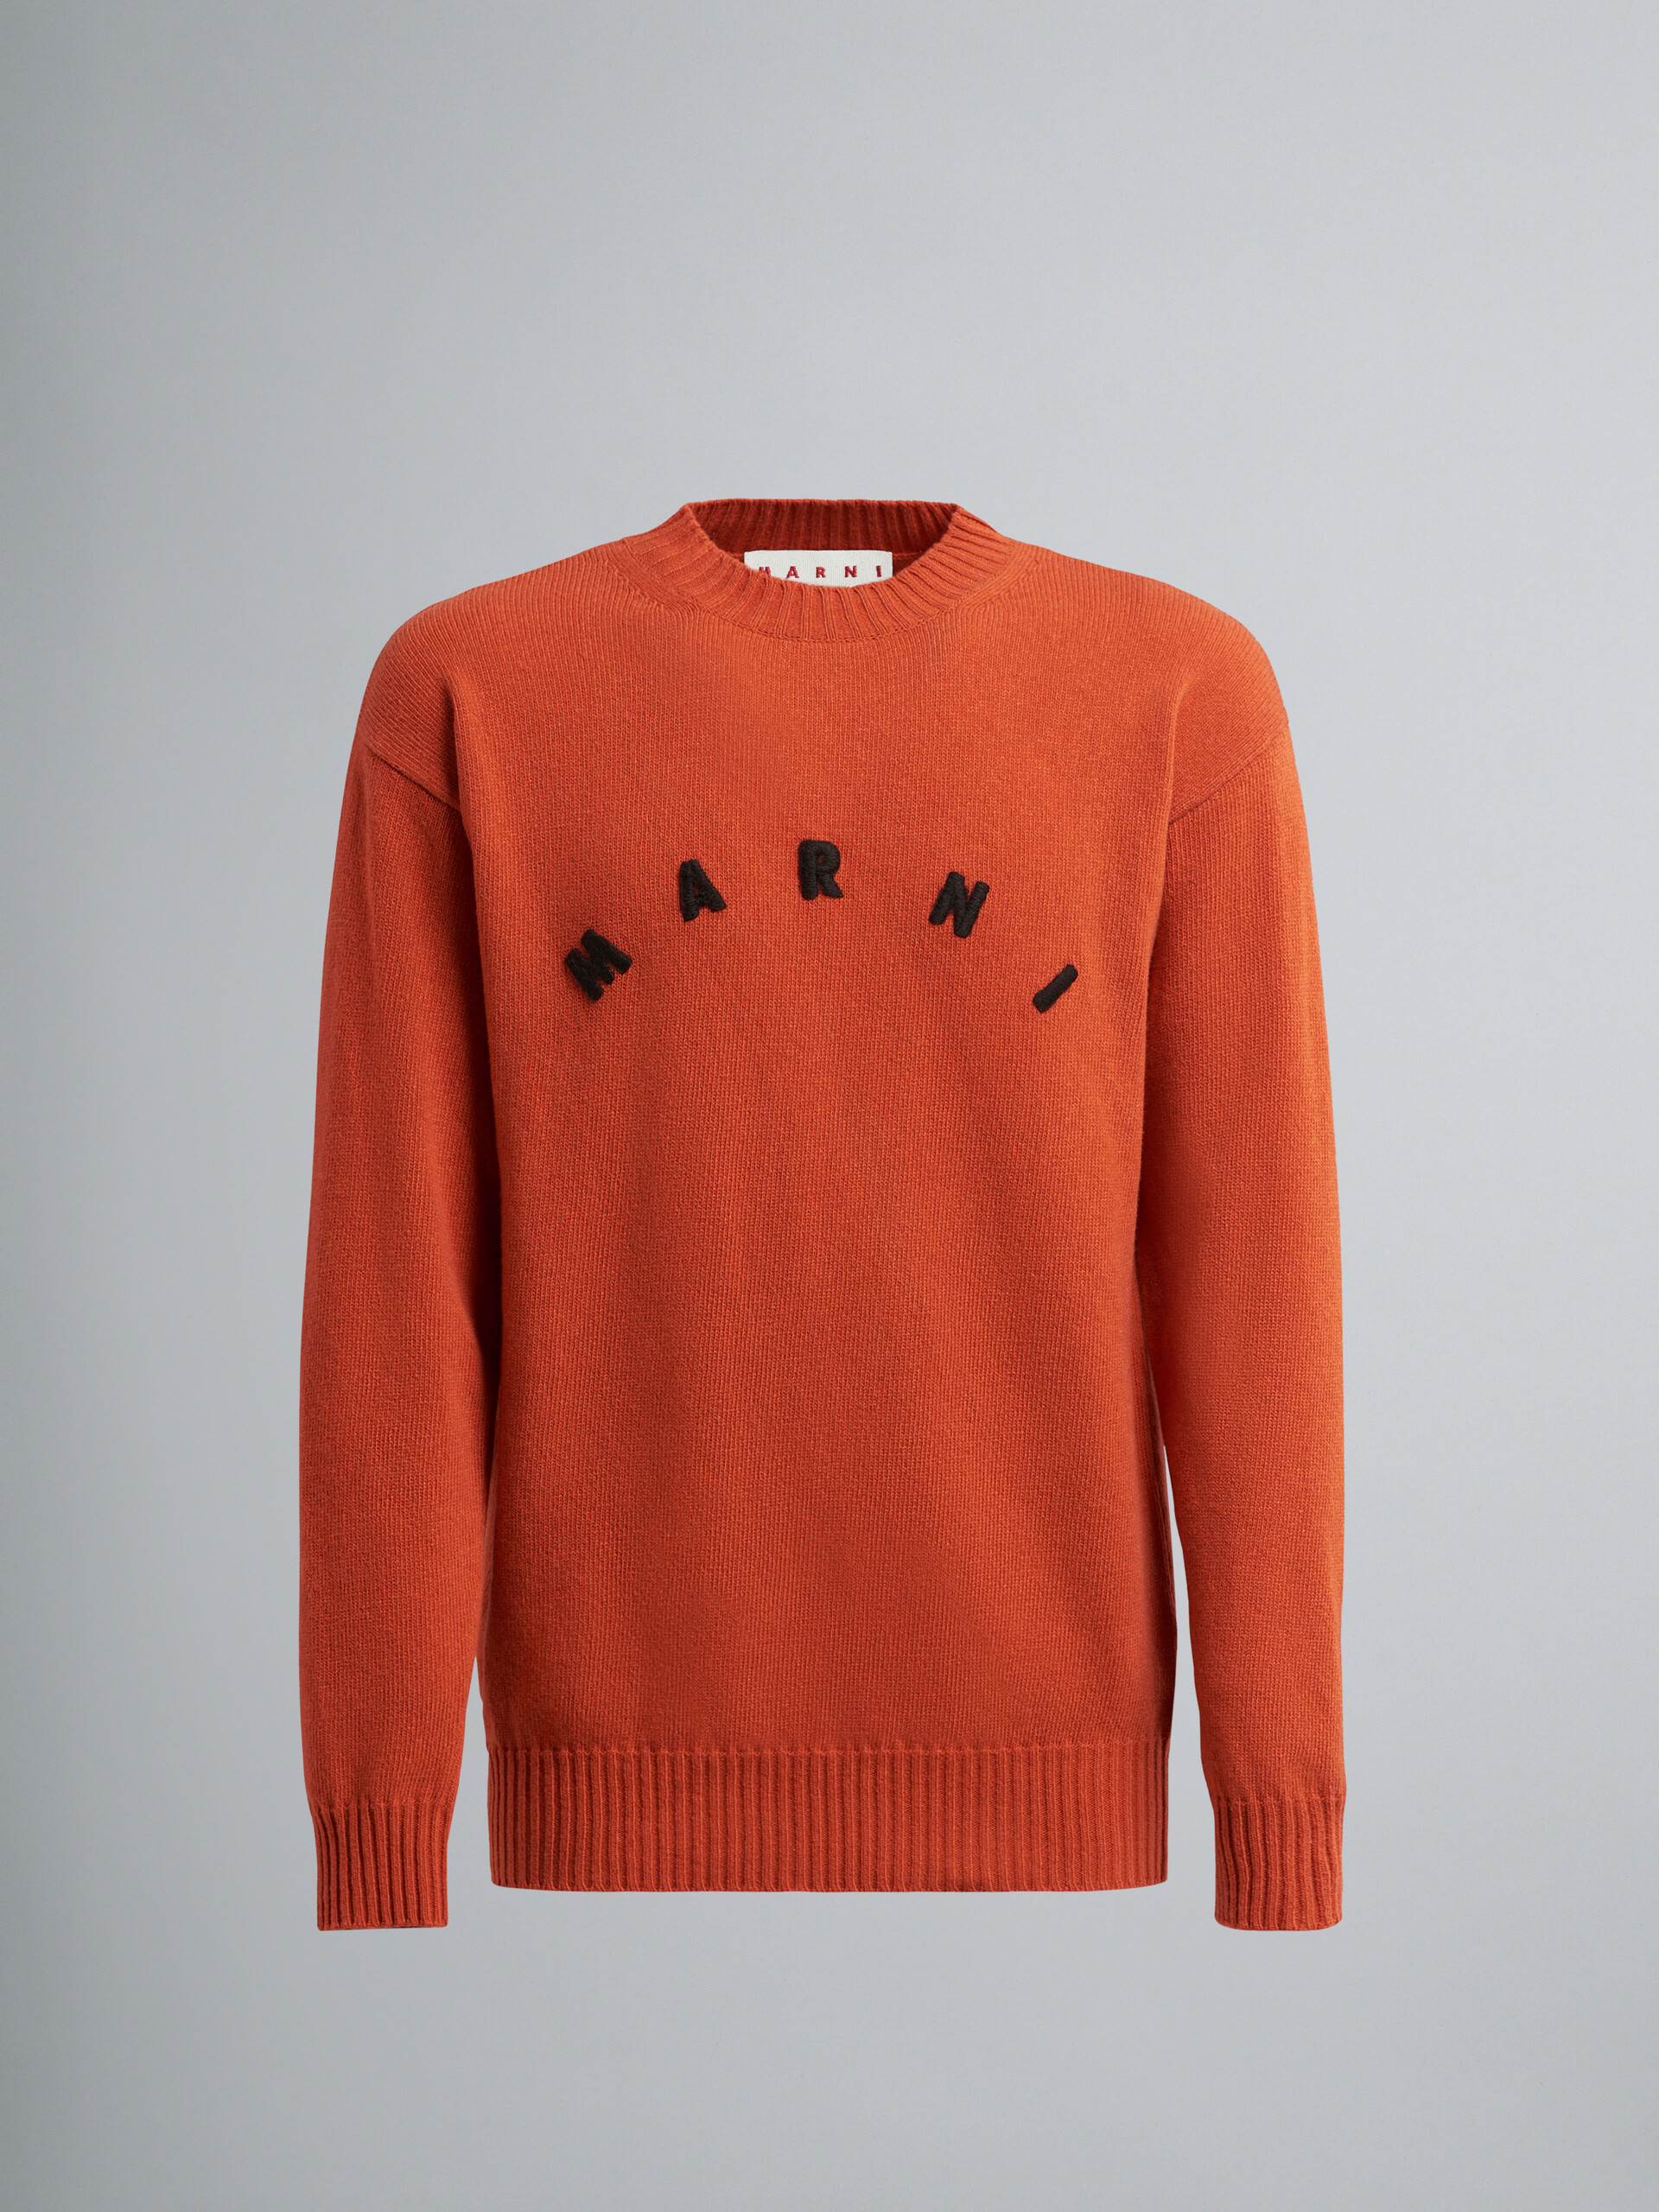 Orange cashmere sweater - Pullovers - Image 1